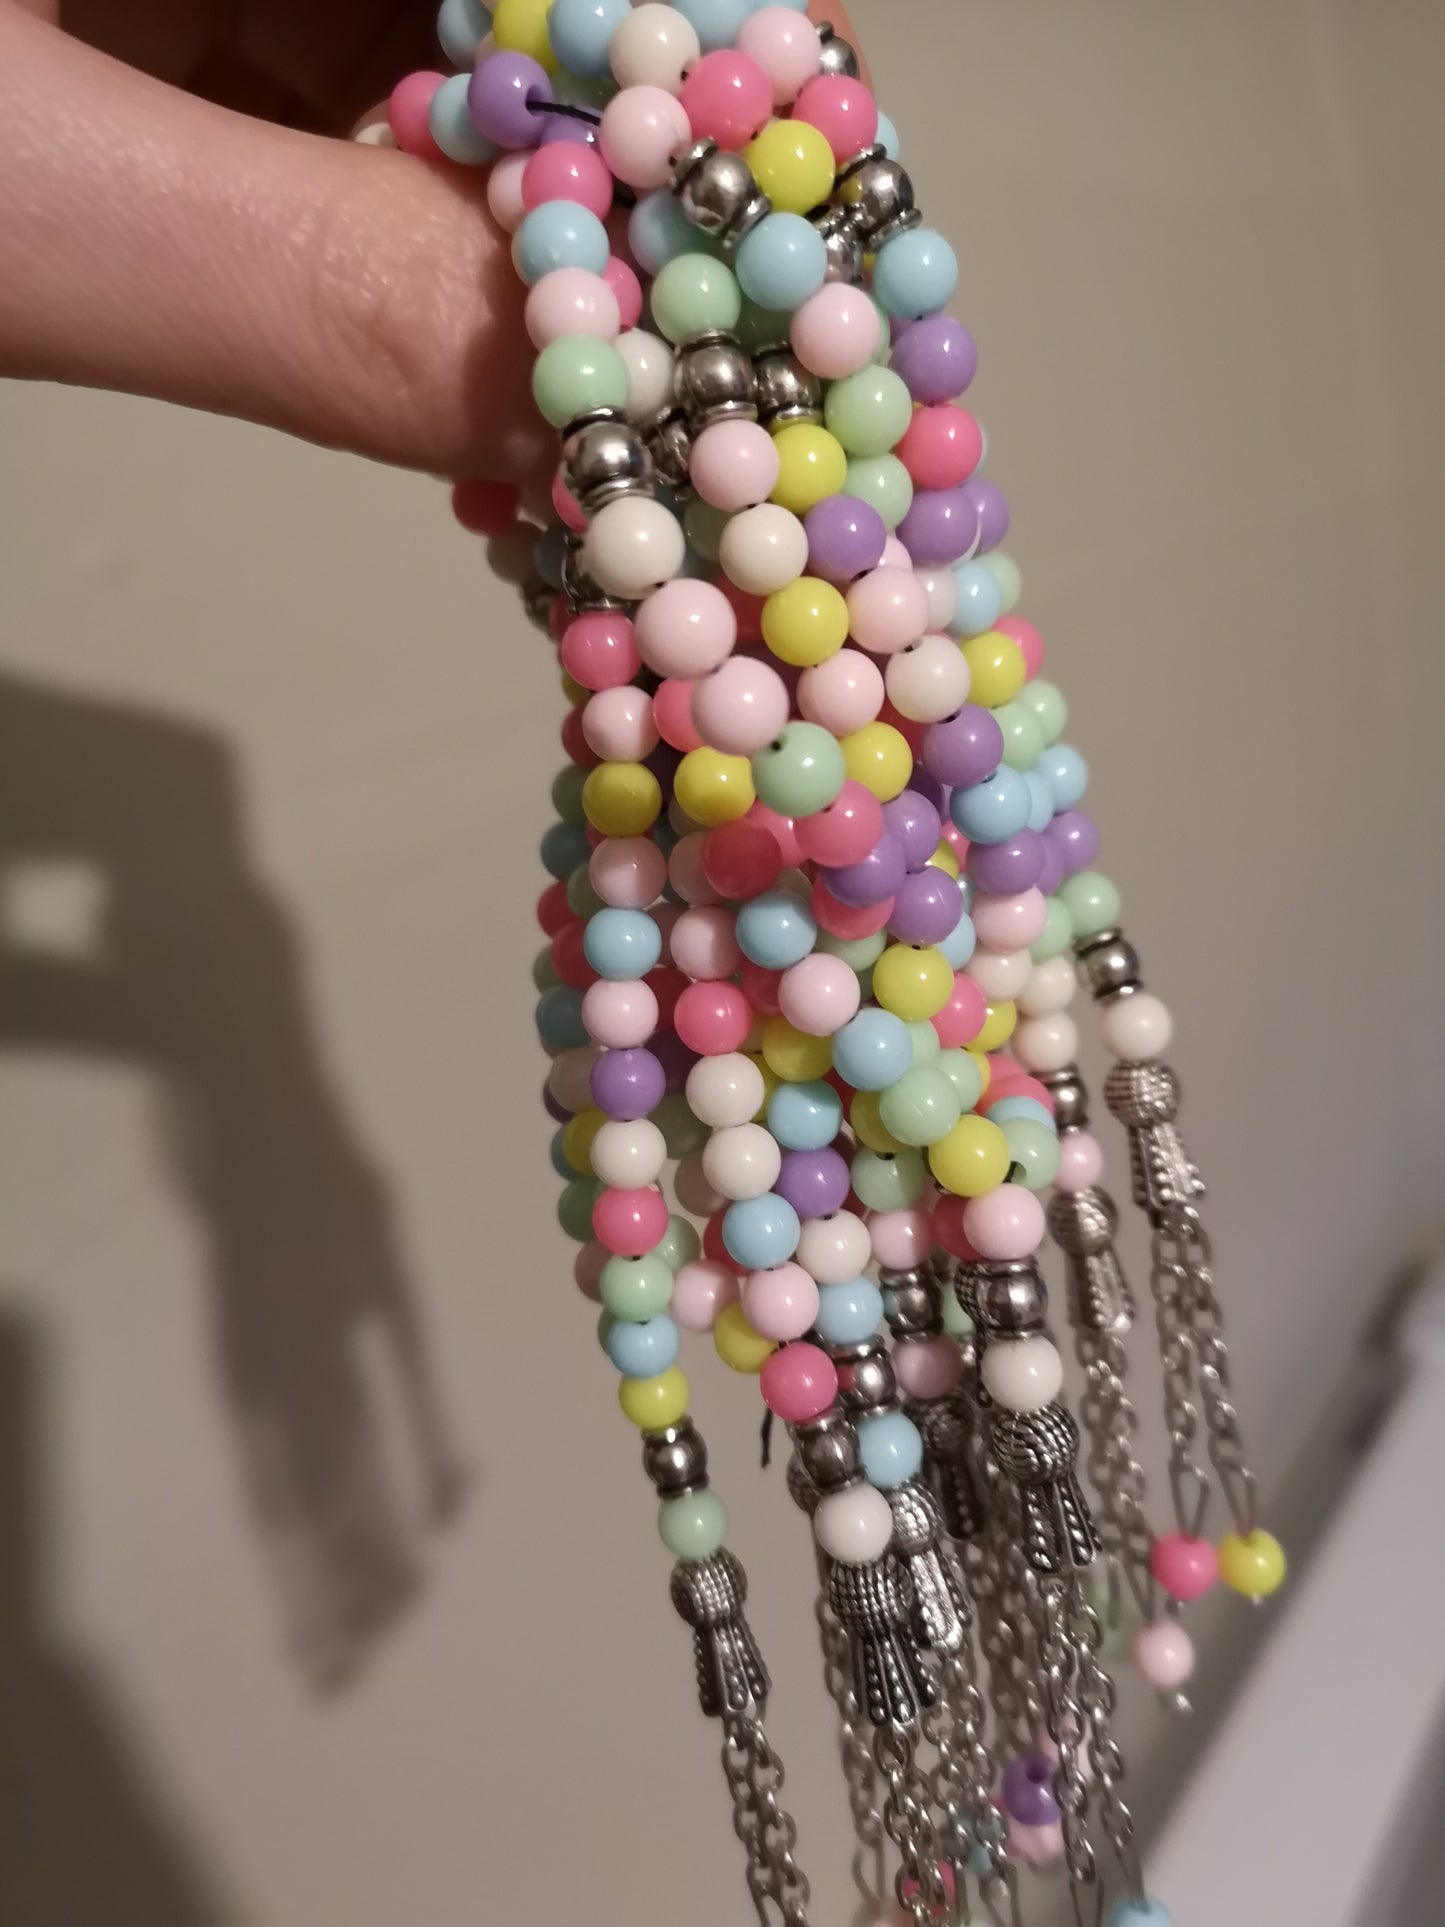 Childrens Tasbih 33 beads [MID-RAMADAN DELIVERY]